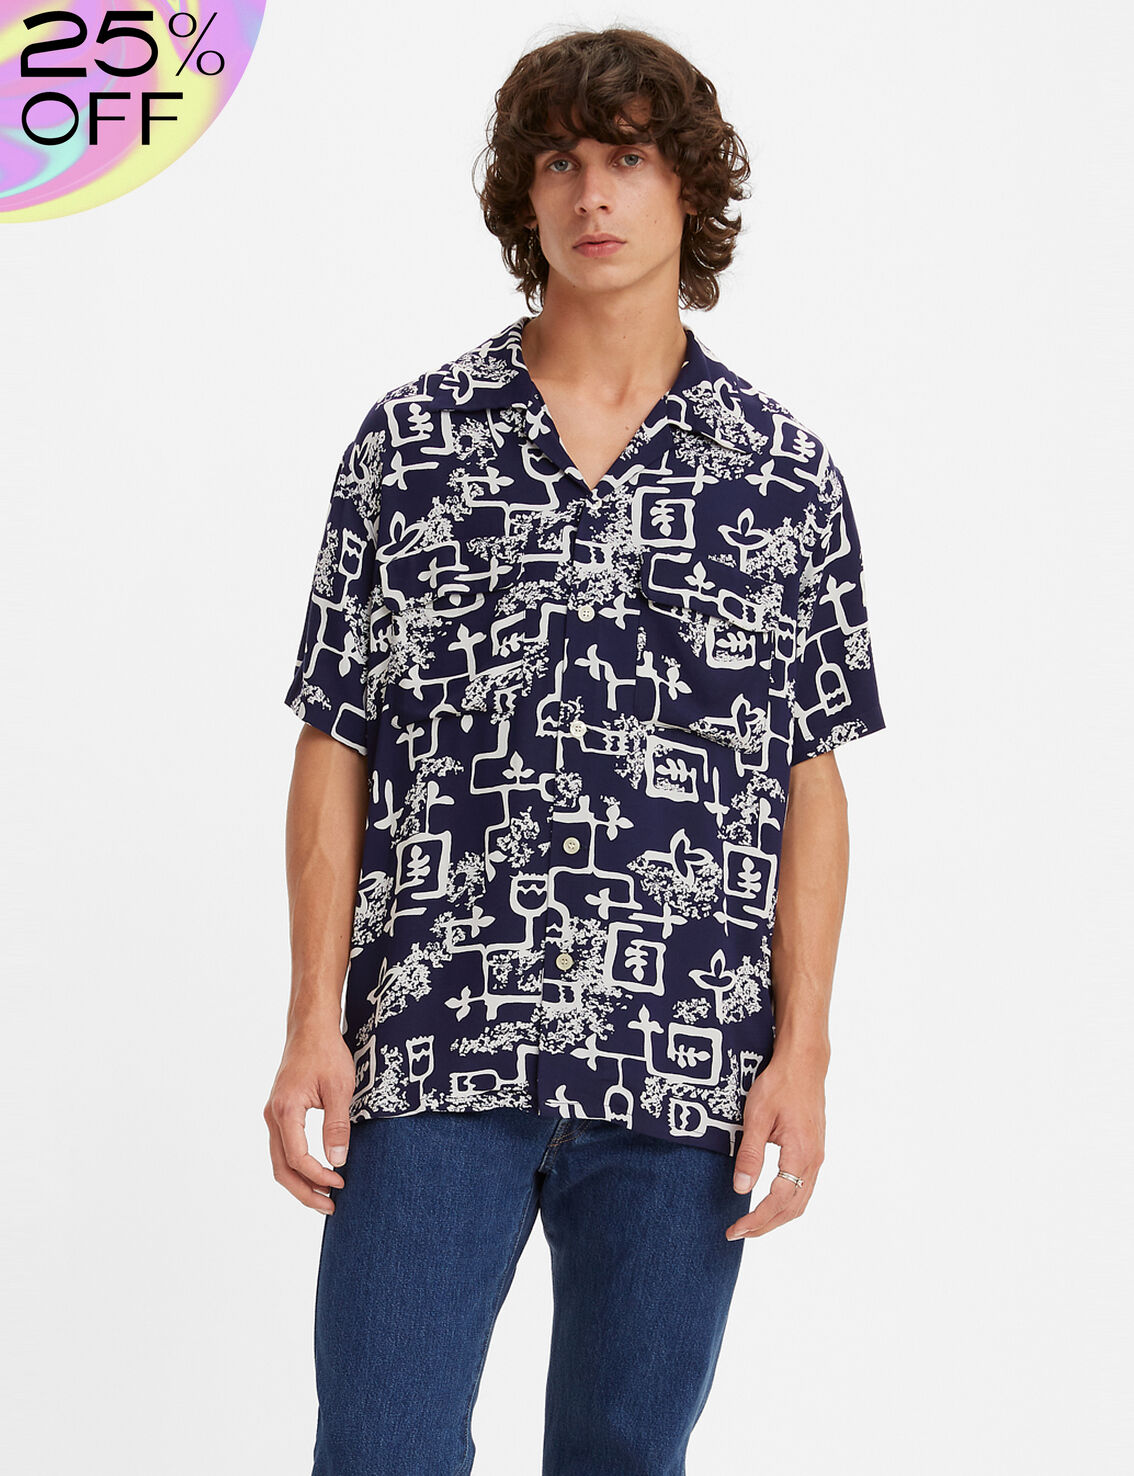 Levi's® Vintage Clothing 1940s Hawaiian Shirt